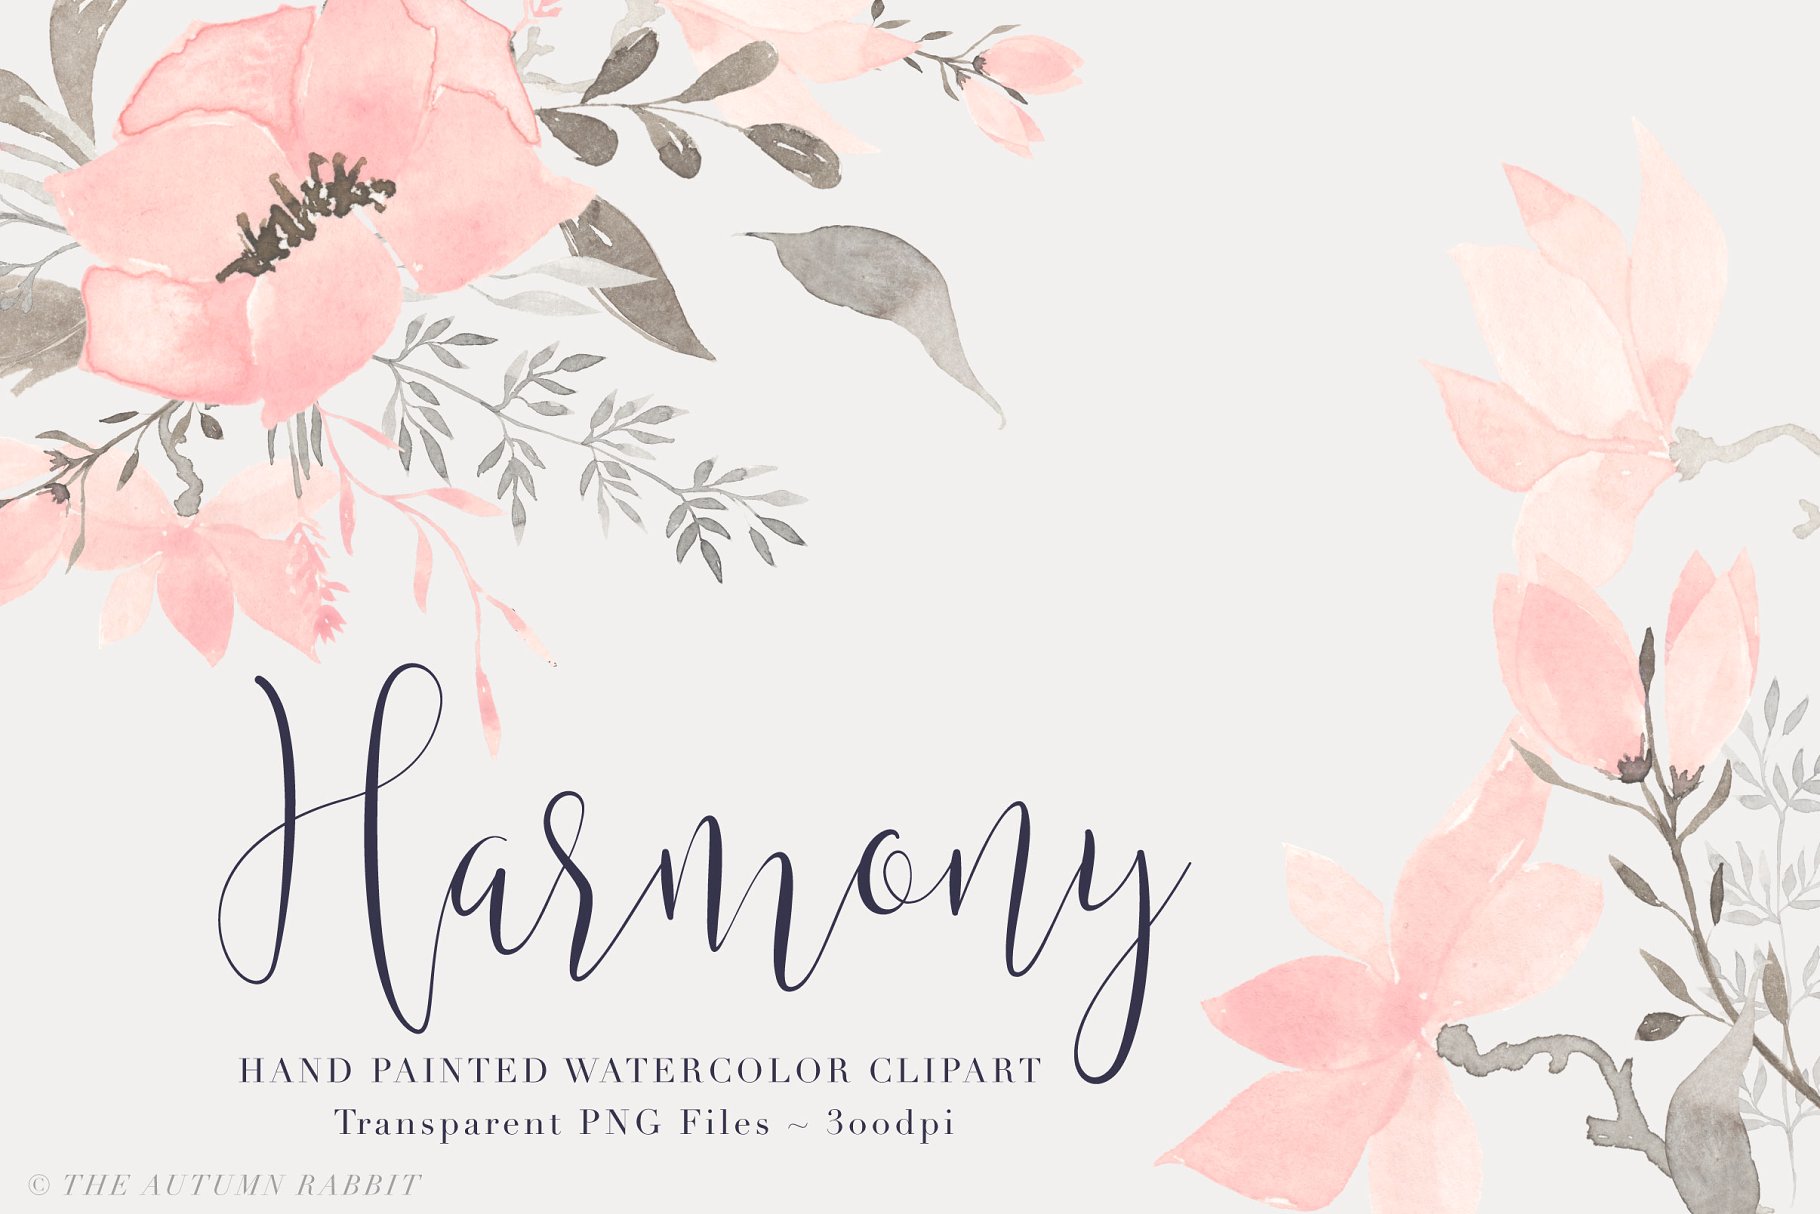 优雅水彩手绘花卉剪贴画 Watercolor Floral Clipart – Harmony插图